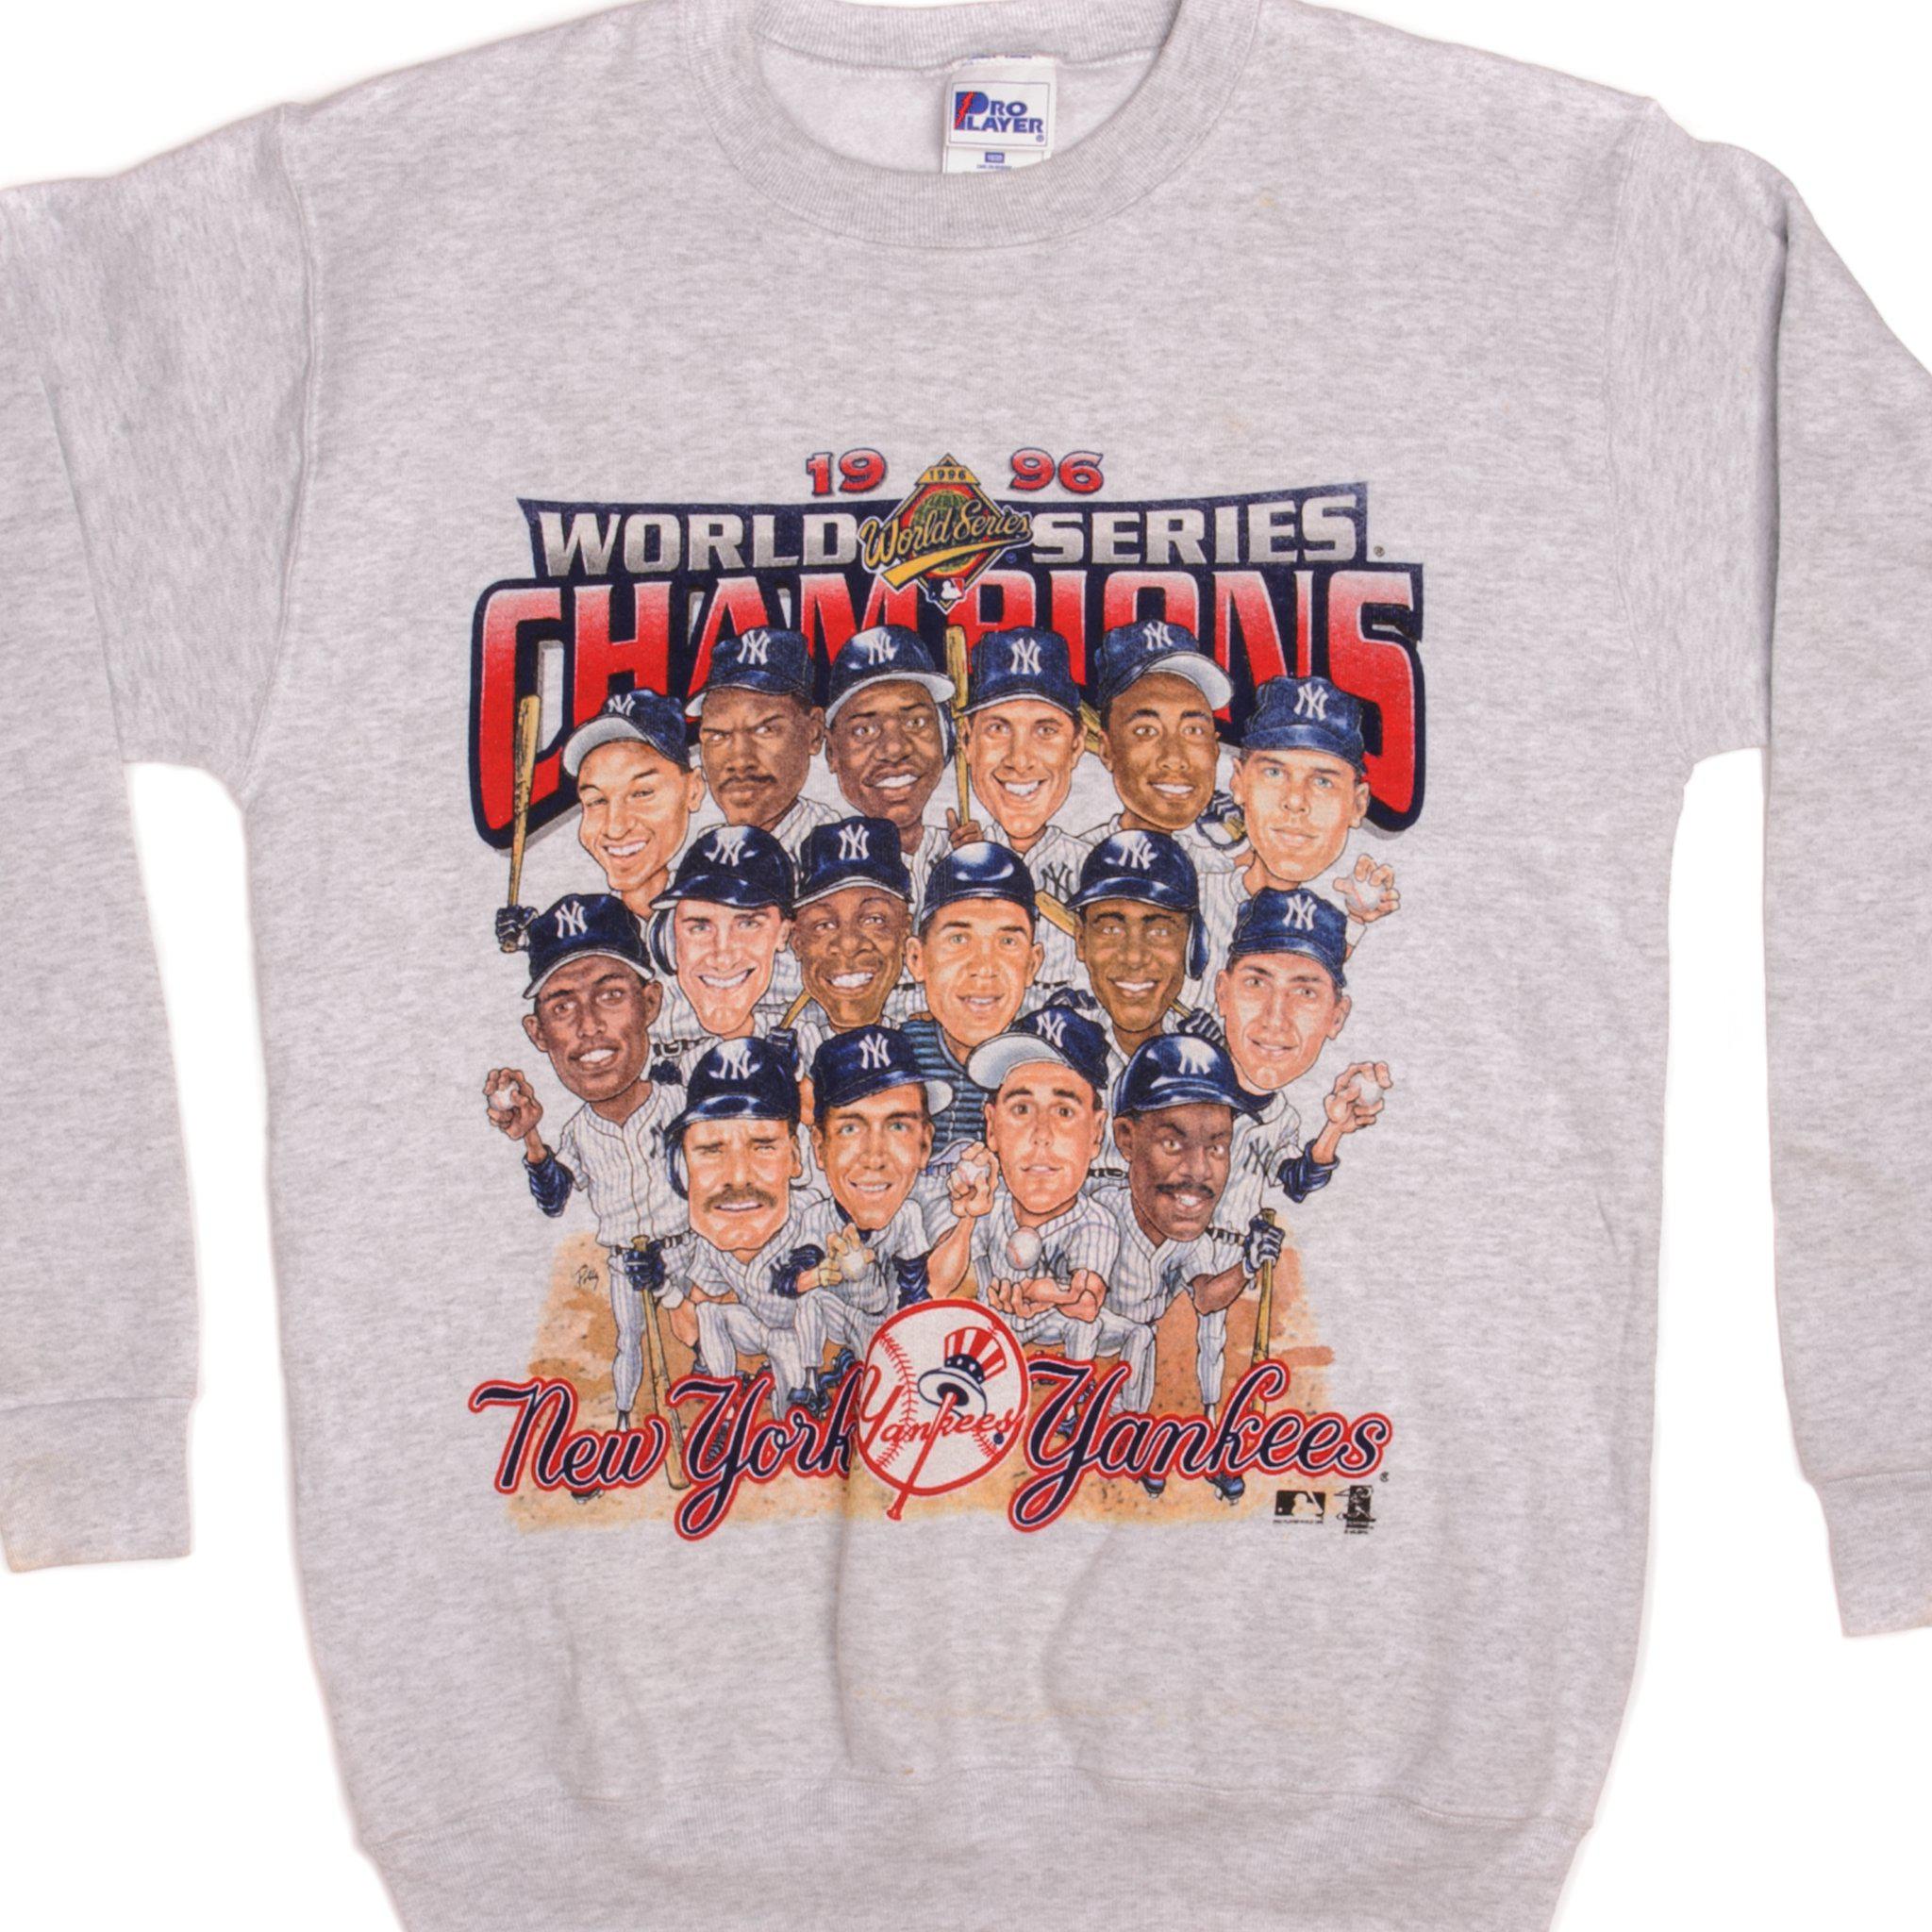 Vintage New York Yankees Crew Neck Sweatshirt 